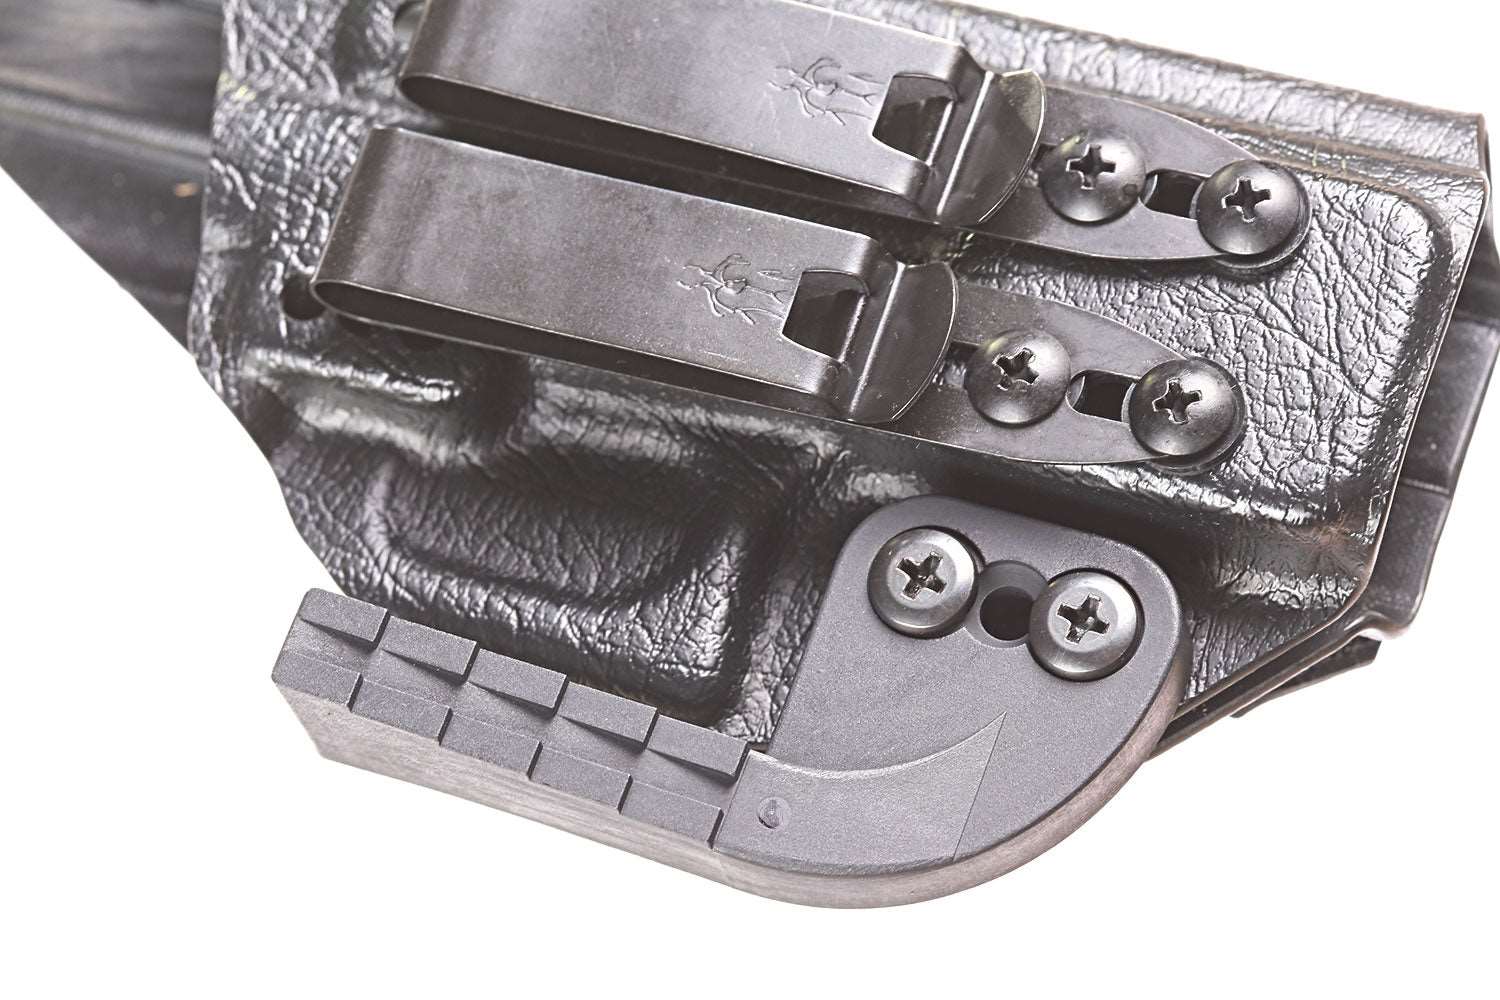 Darkwing AIWB Holster Attachment / Replacement - V Development Group edc glock shirt carry aiwb appendix belt rmt tourniquet